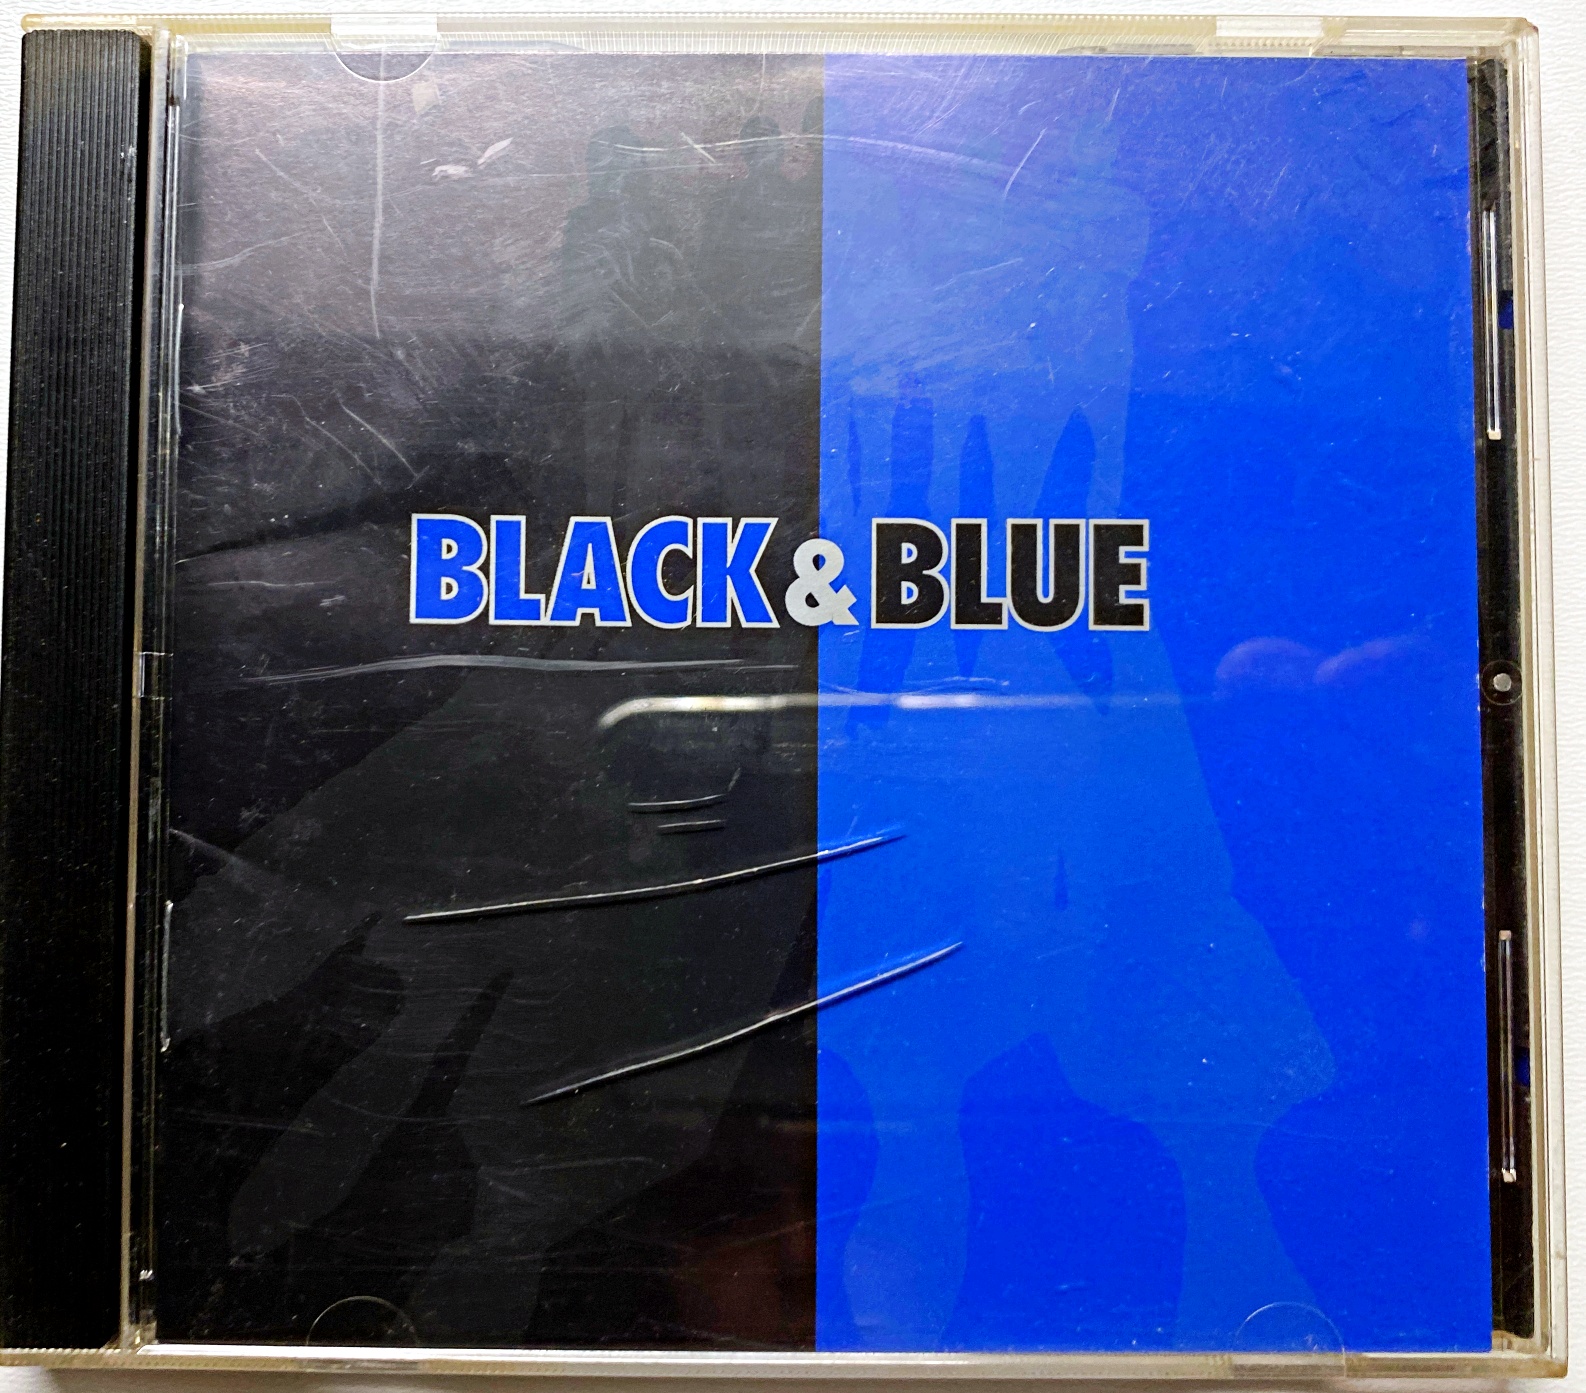 CD Backstreet Boys – Black & Blue